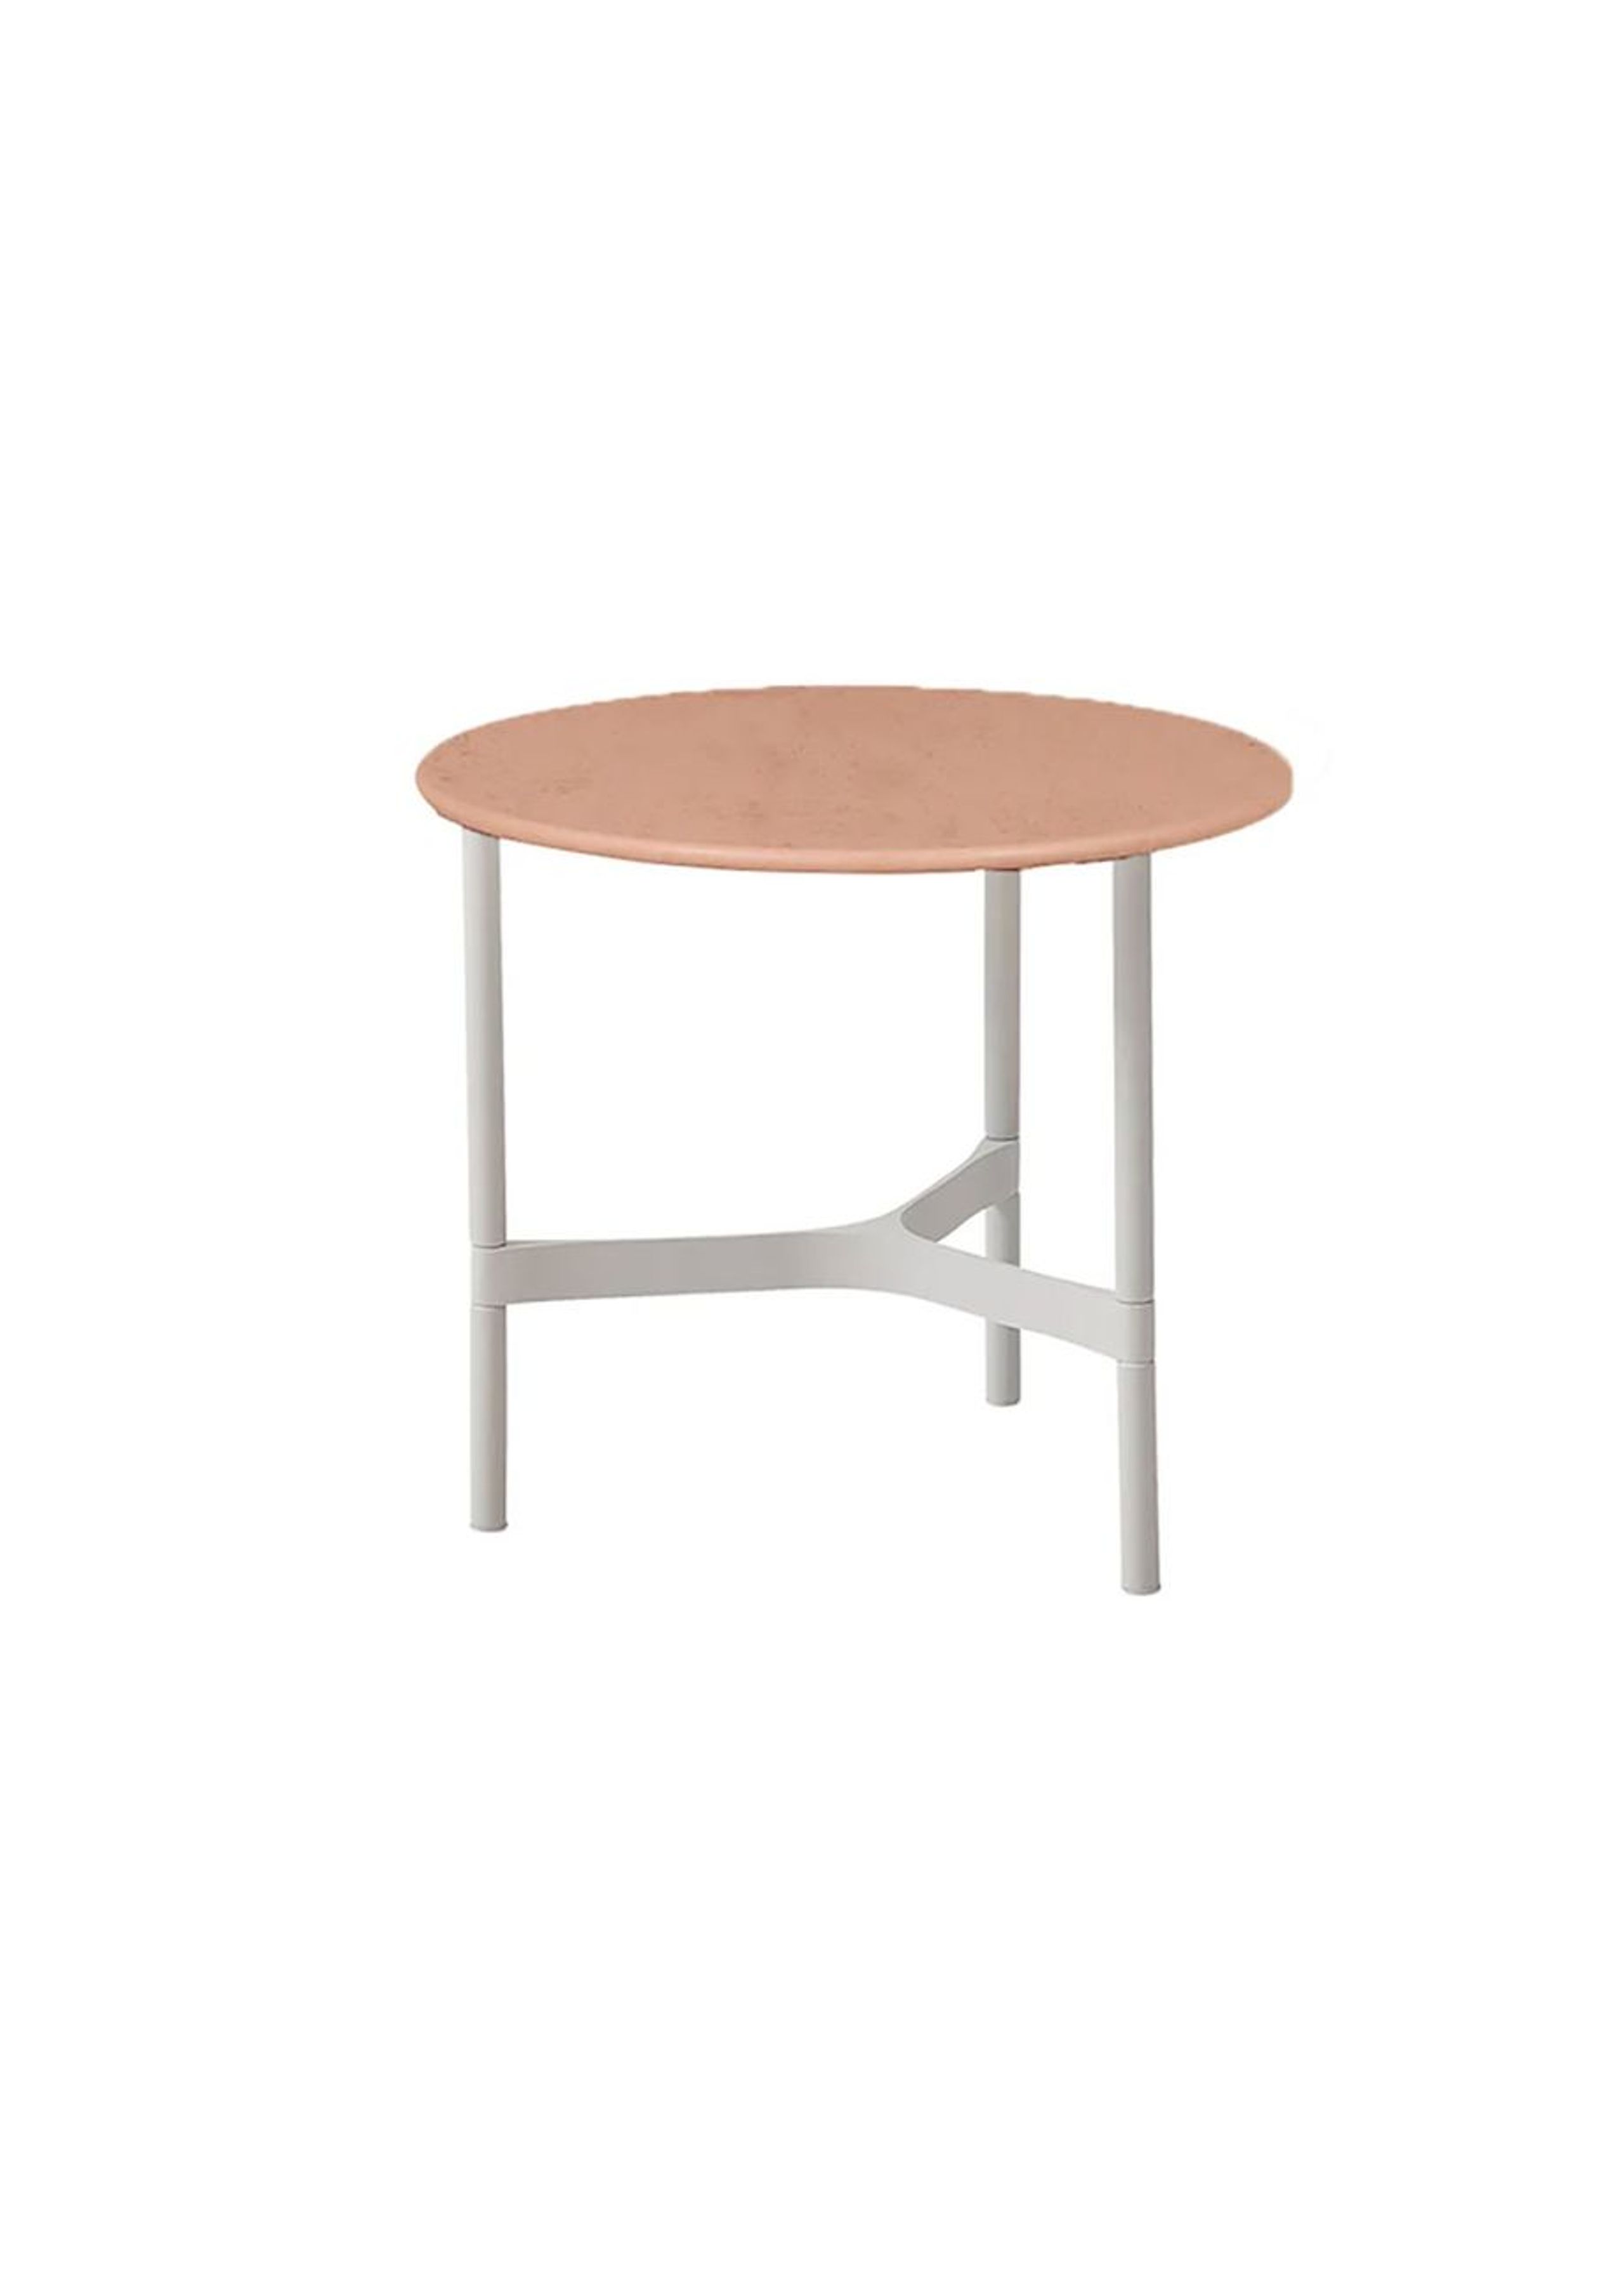 Cane-line - Loungetisch - Twist Coffee Table - Small - Base: White, Aluminium / Top: Terracotta, Ceramic